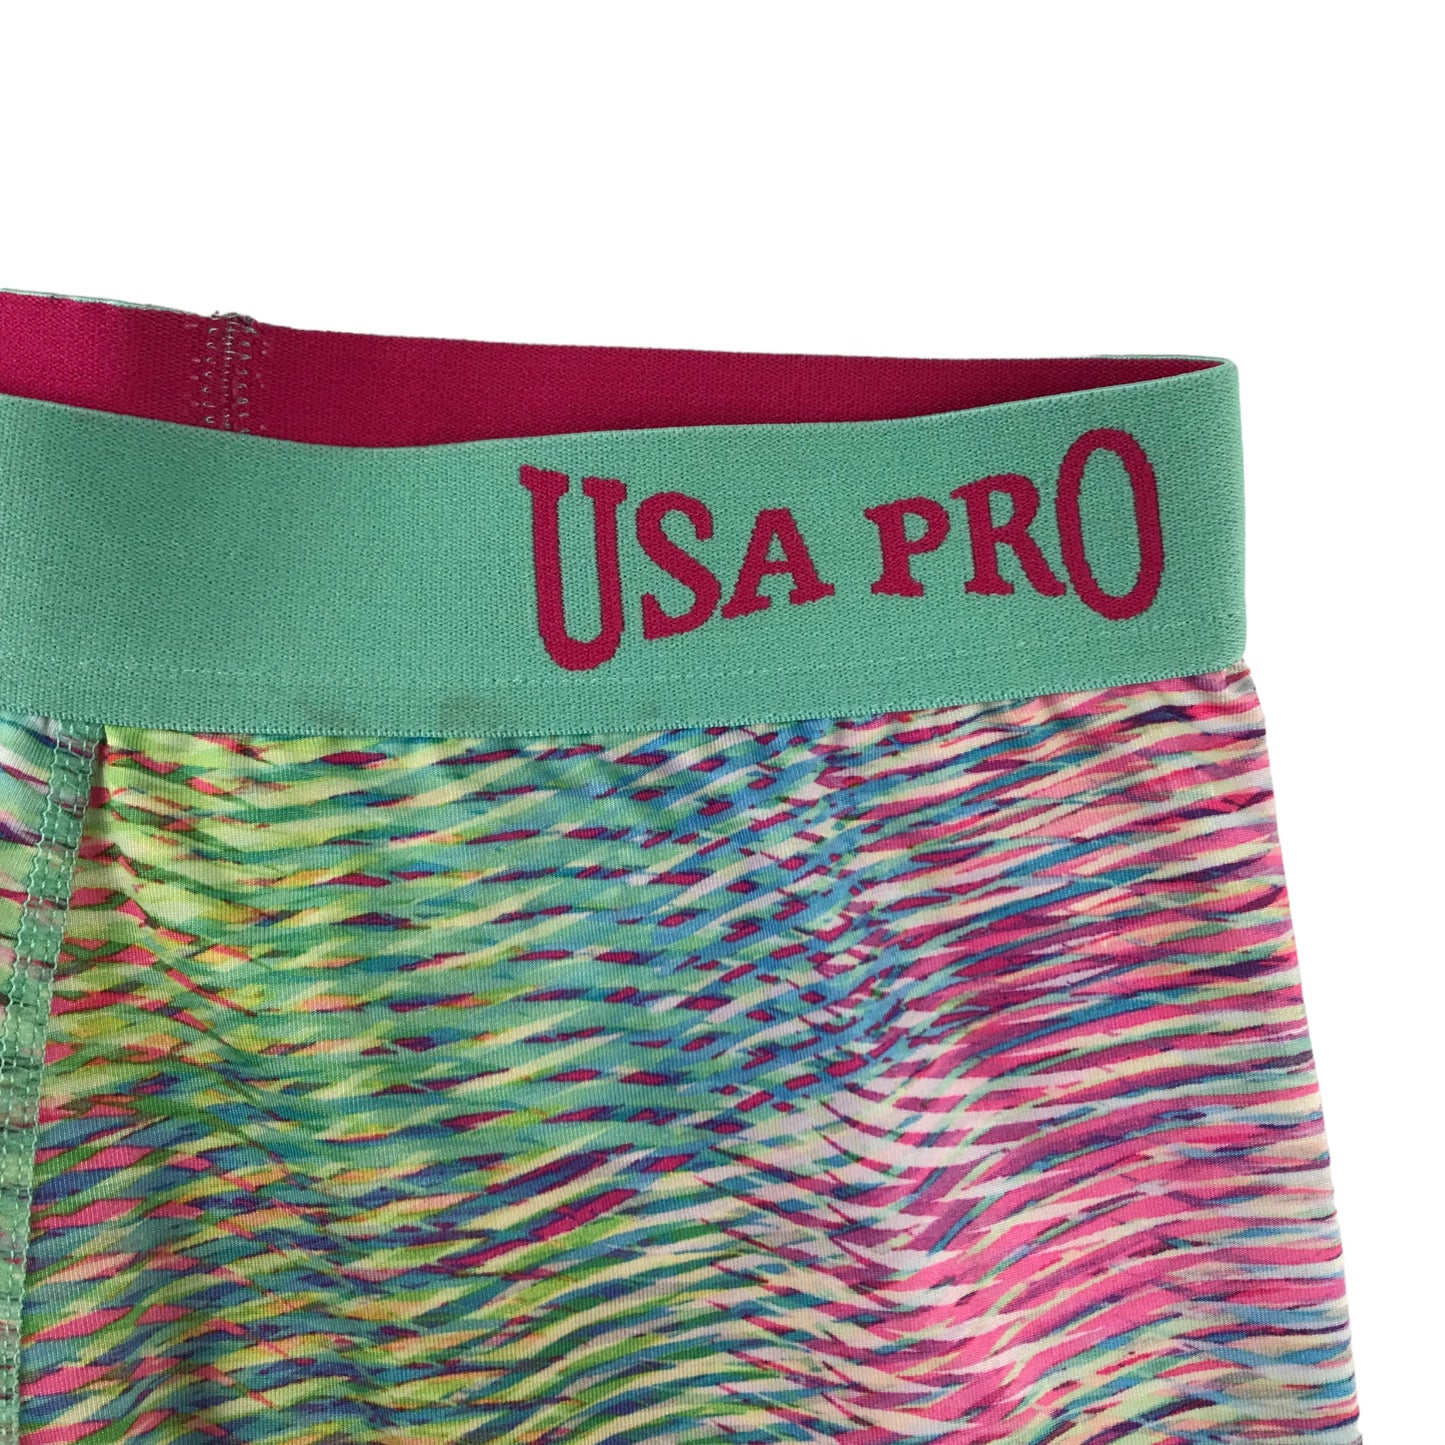 USA Pro Leggings Age 9 Multicoloured Graphic Print 3/4 length